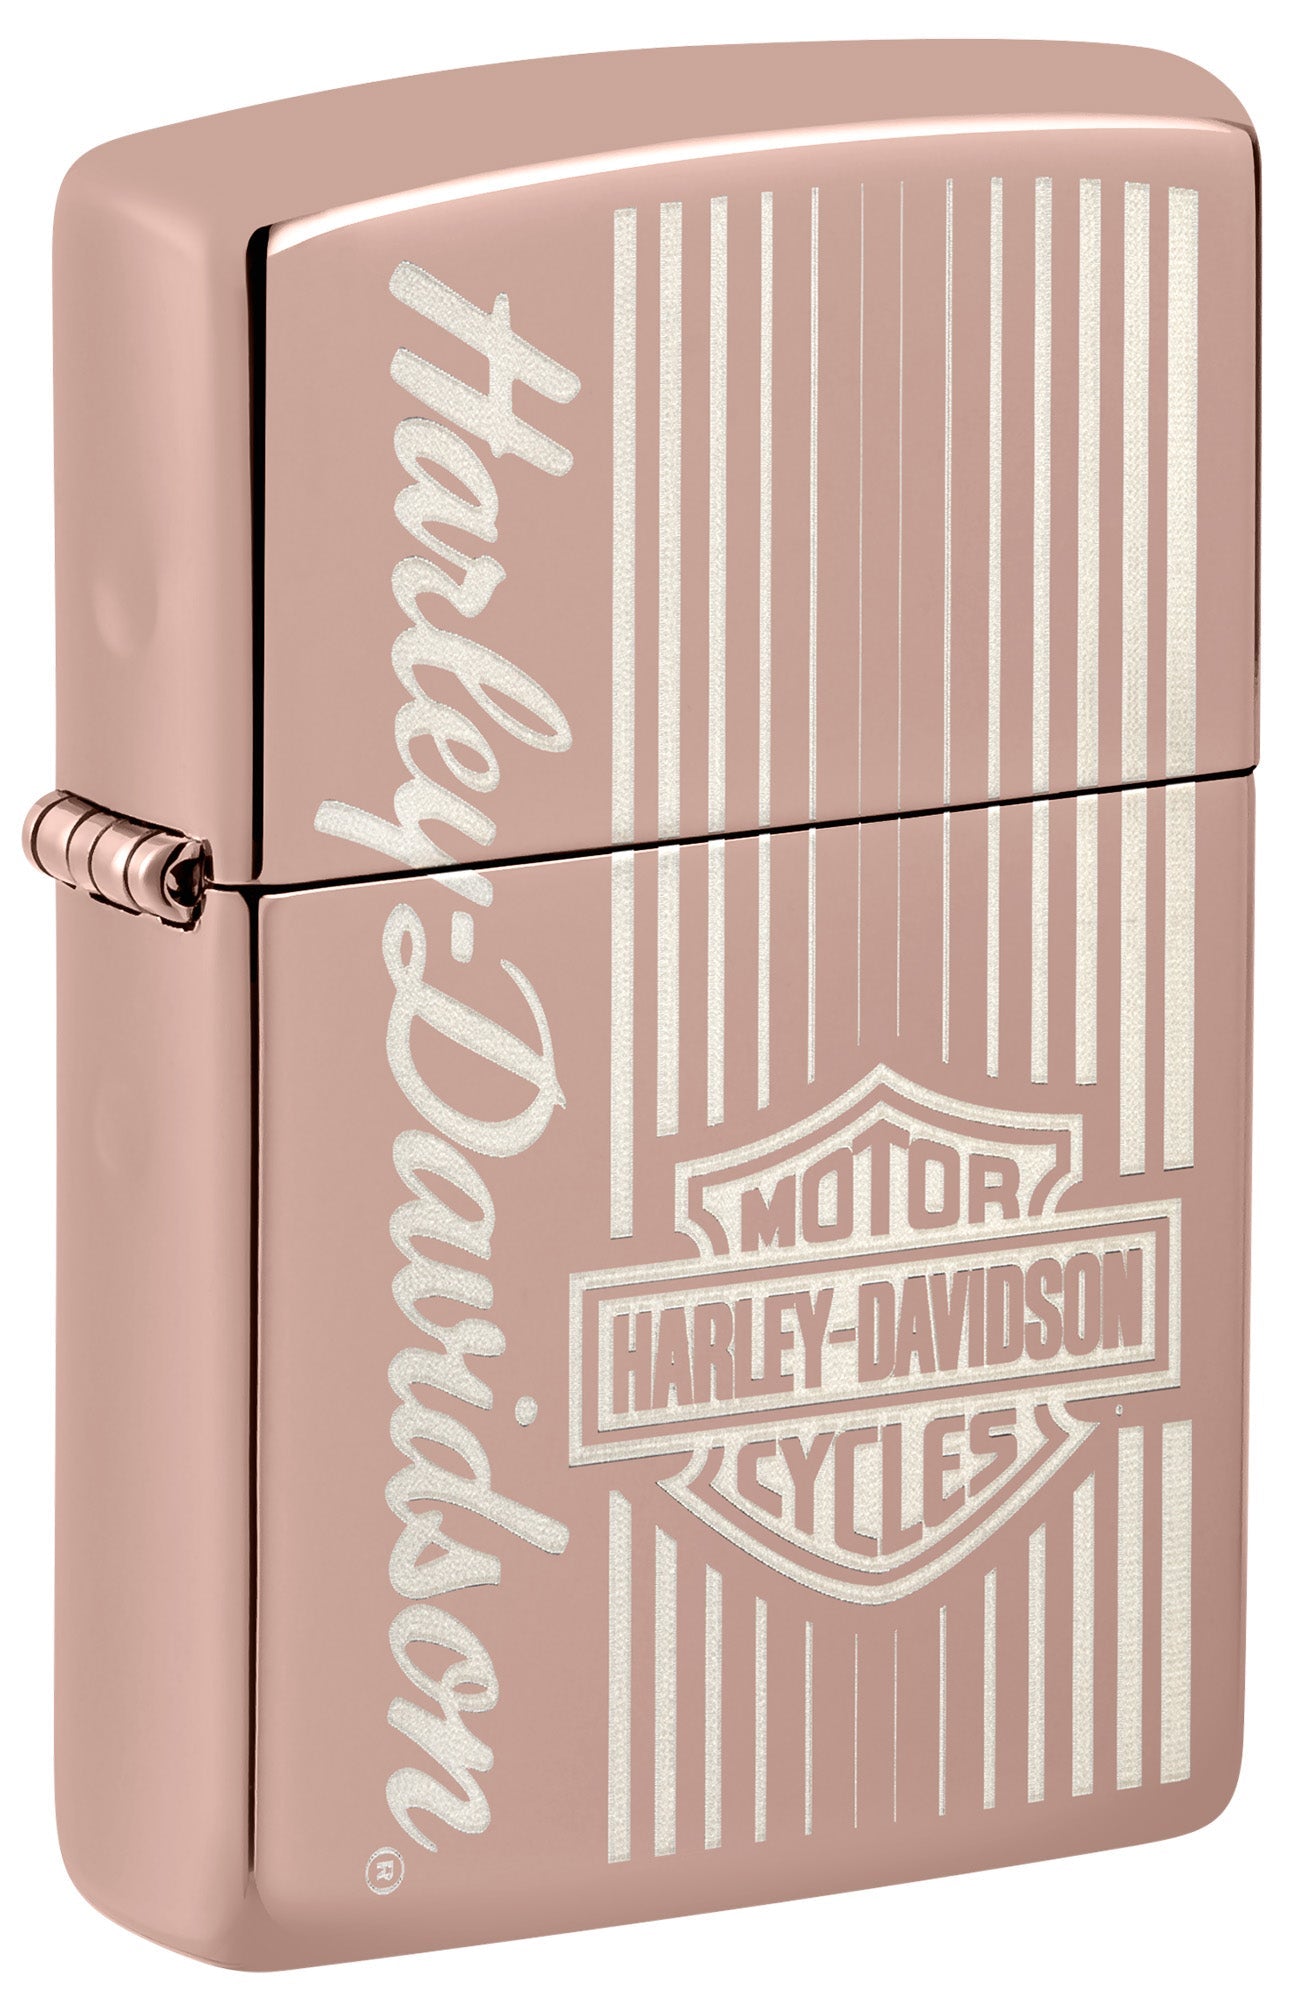 Zippo Lighter: Harley-Davidson Engraved Design - High Polish Rose Gold 48992